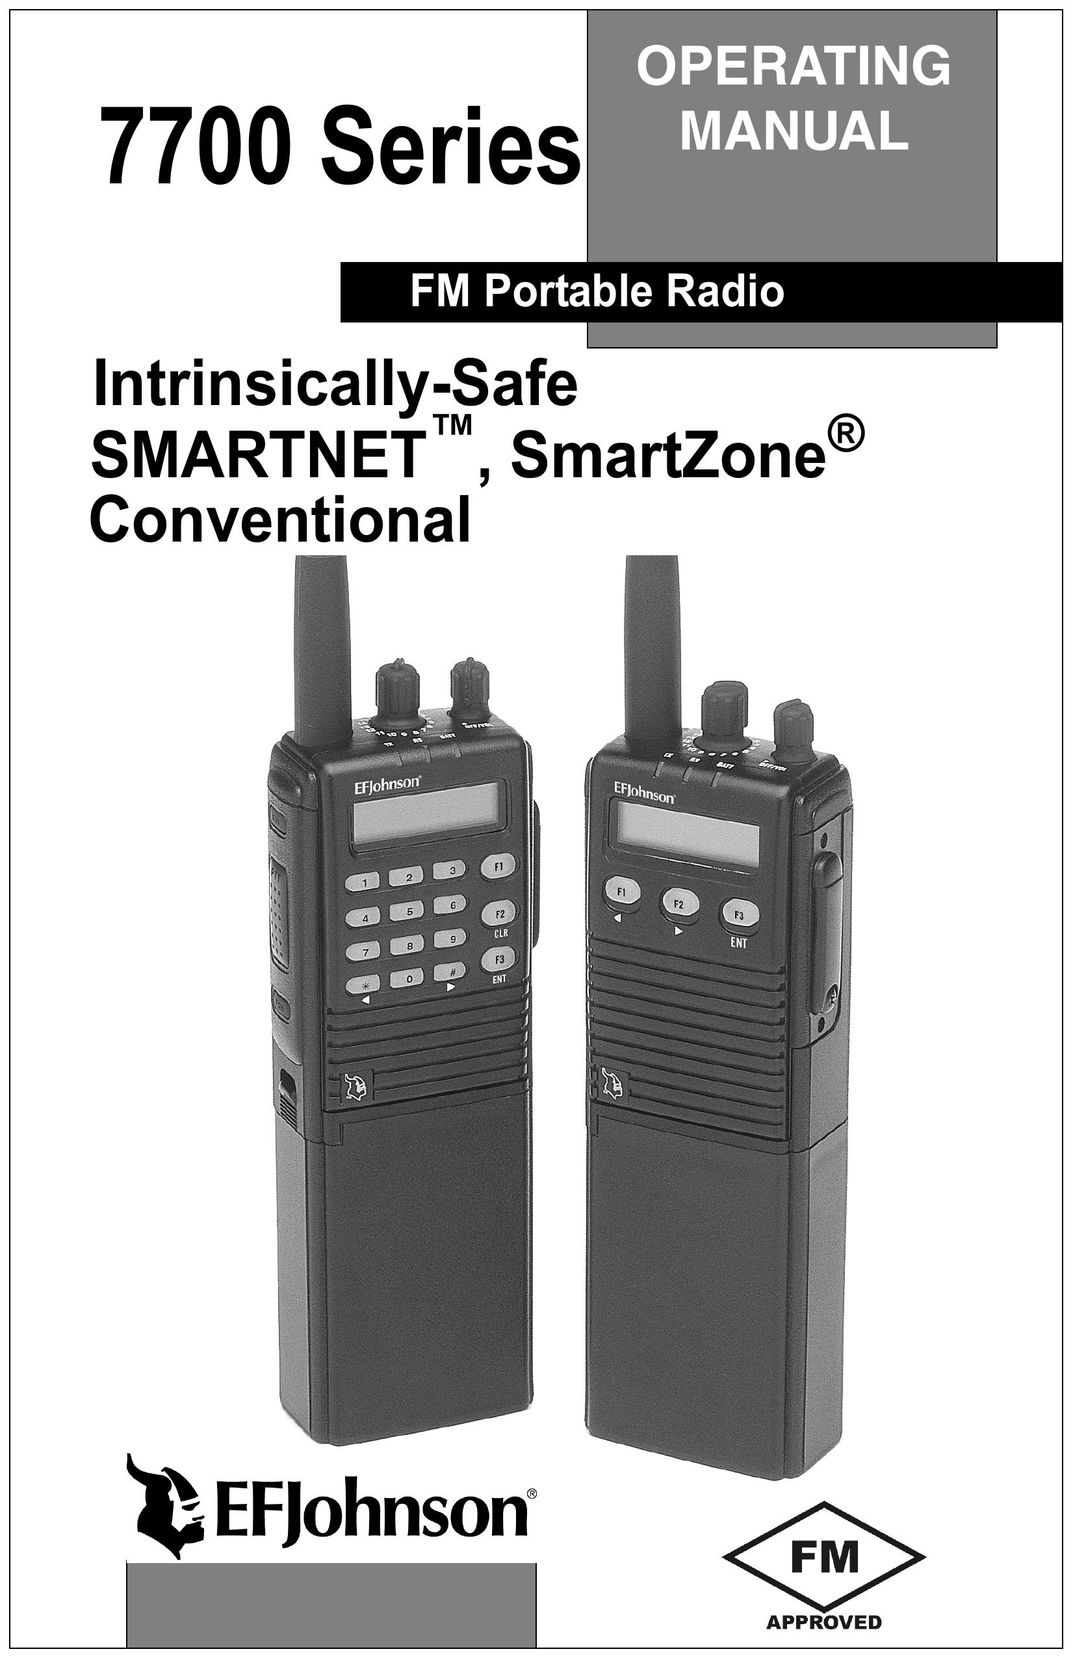 EFJohnson FM Portable Radio Intrinsically-Safe SMARTNET, SmartZone Conventional Radio User Manual